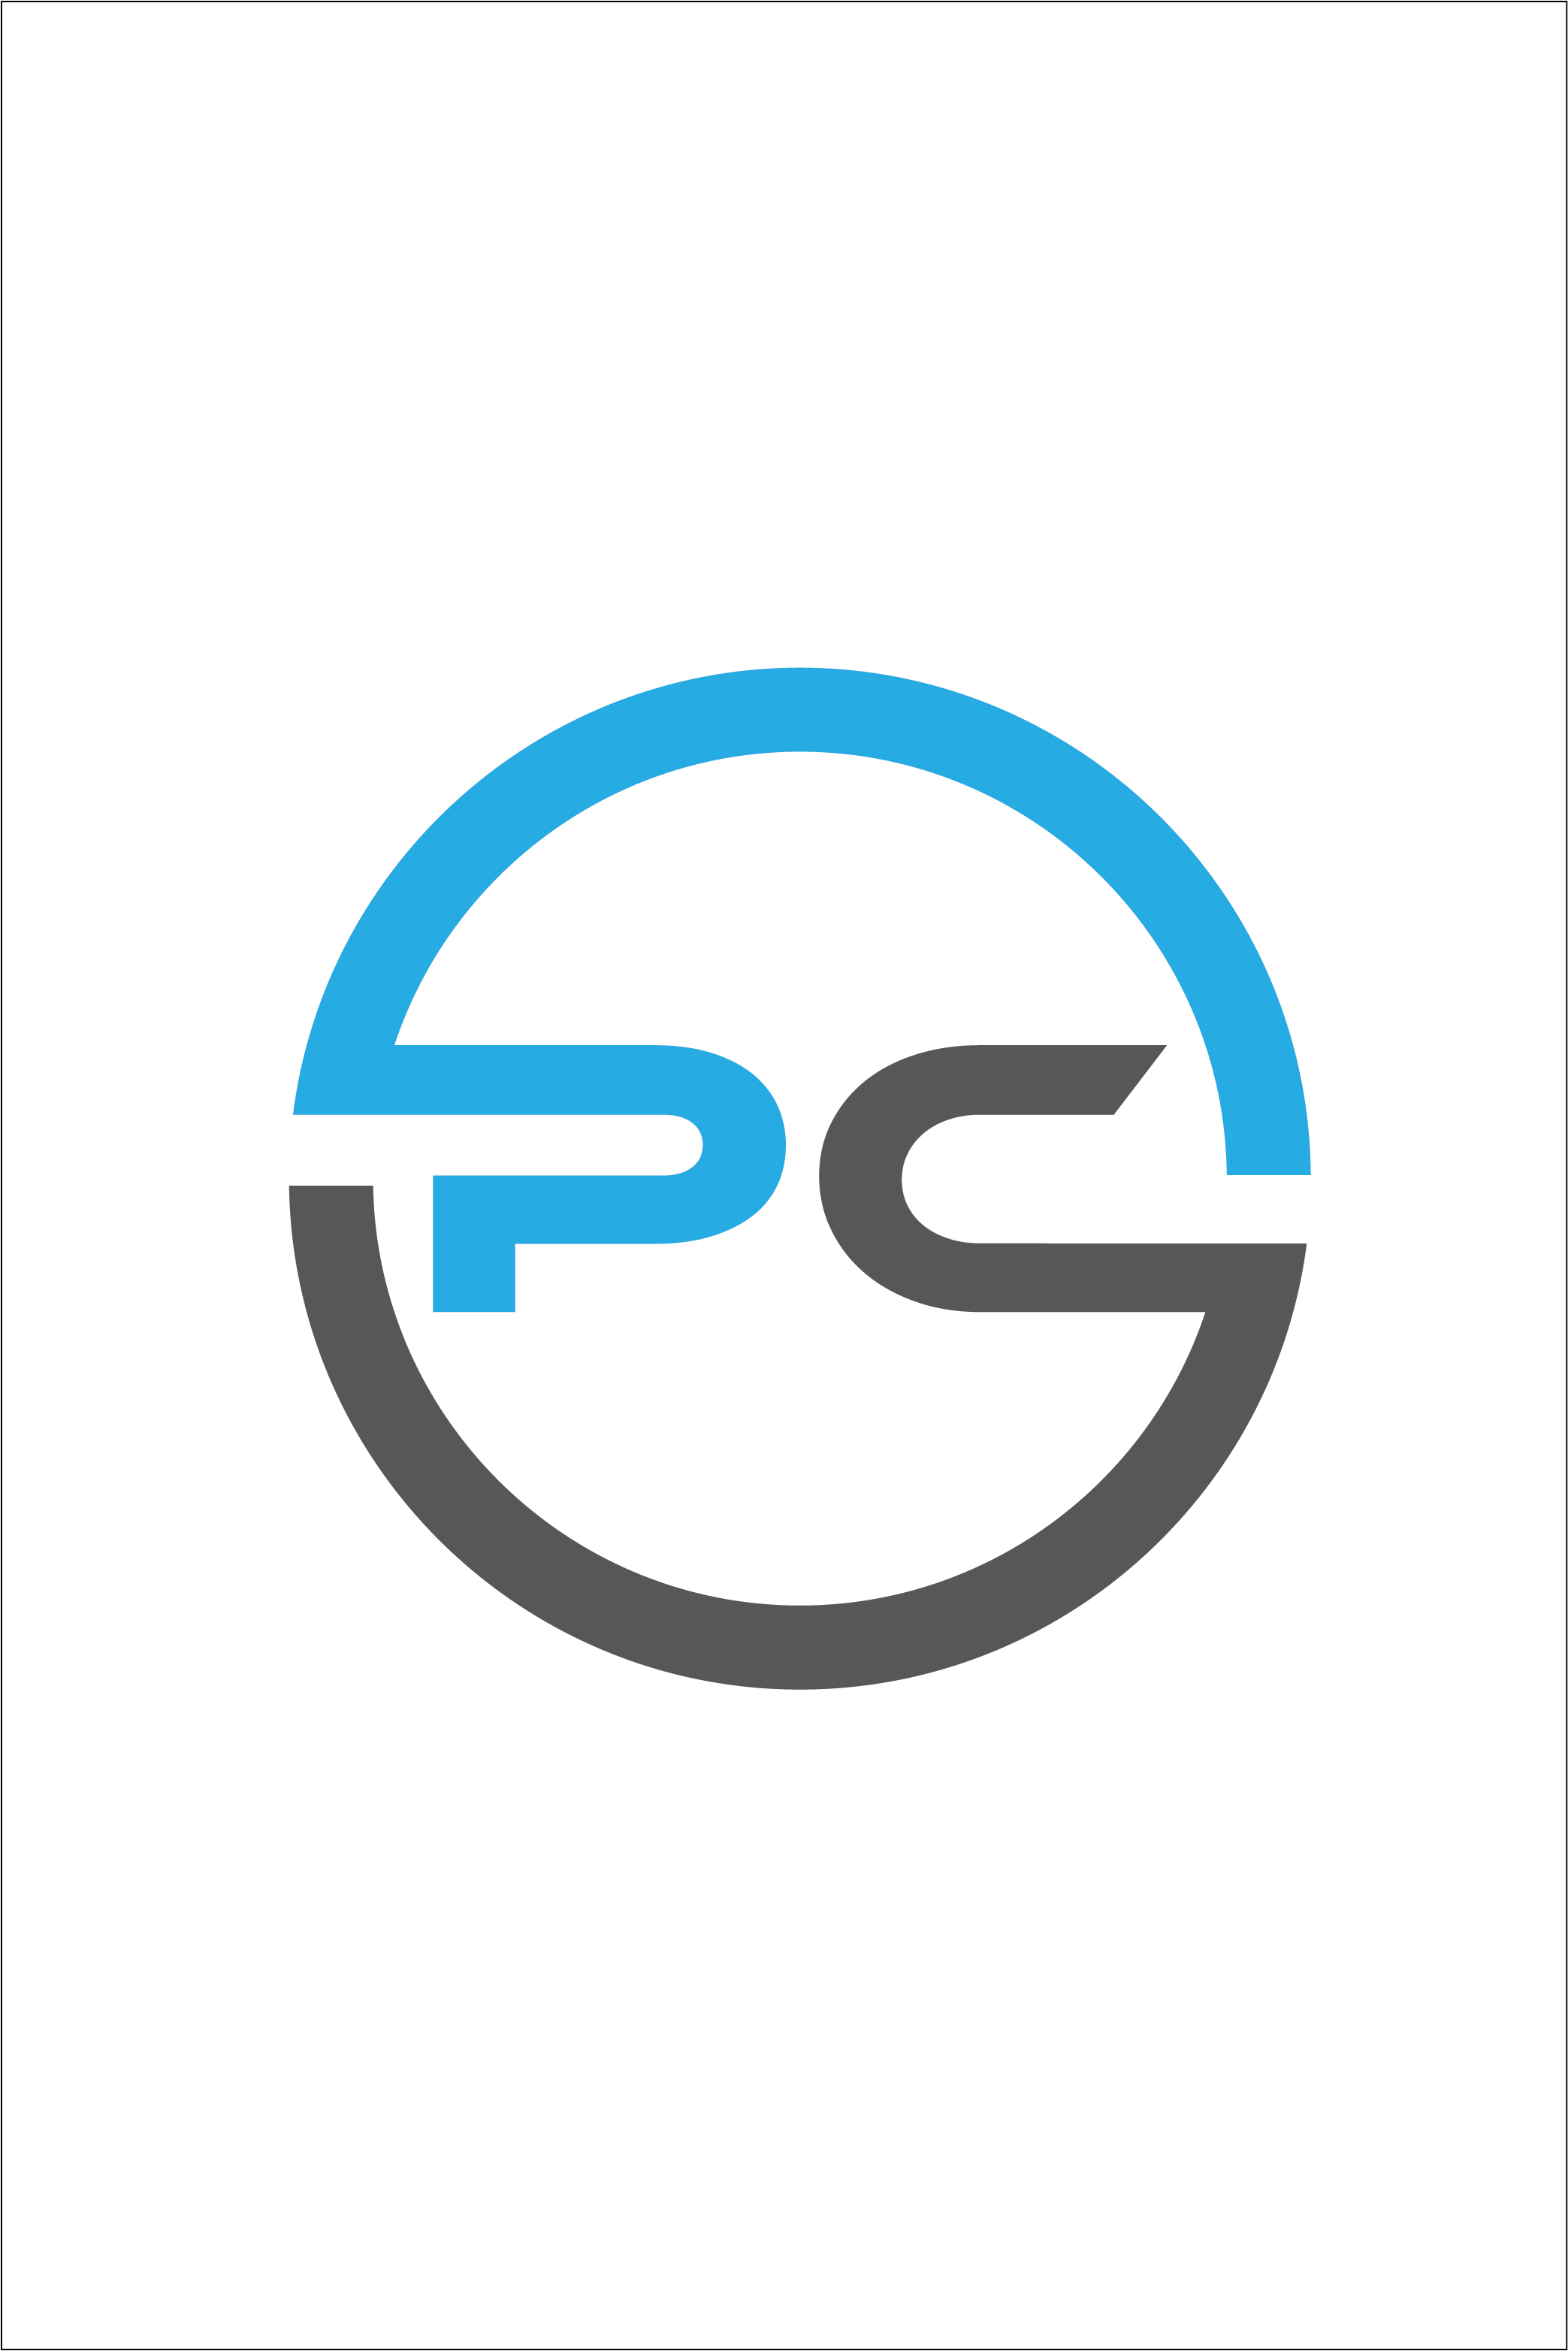 Letter PC Logo Design Vector Image Template pinterest preview image.